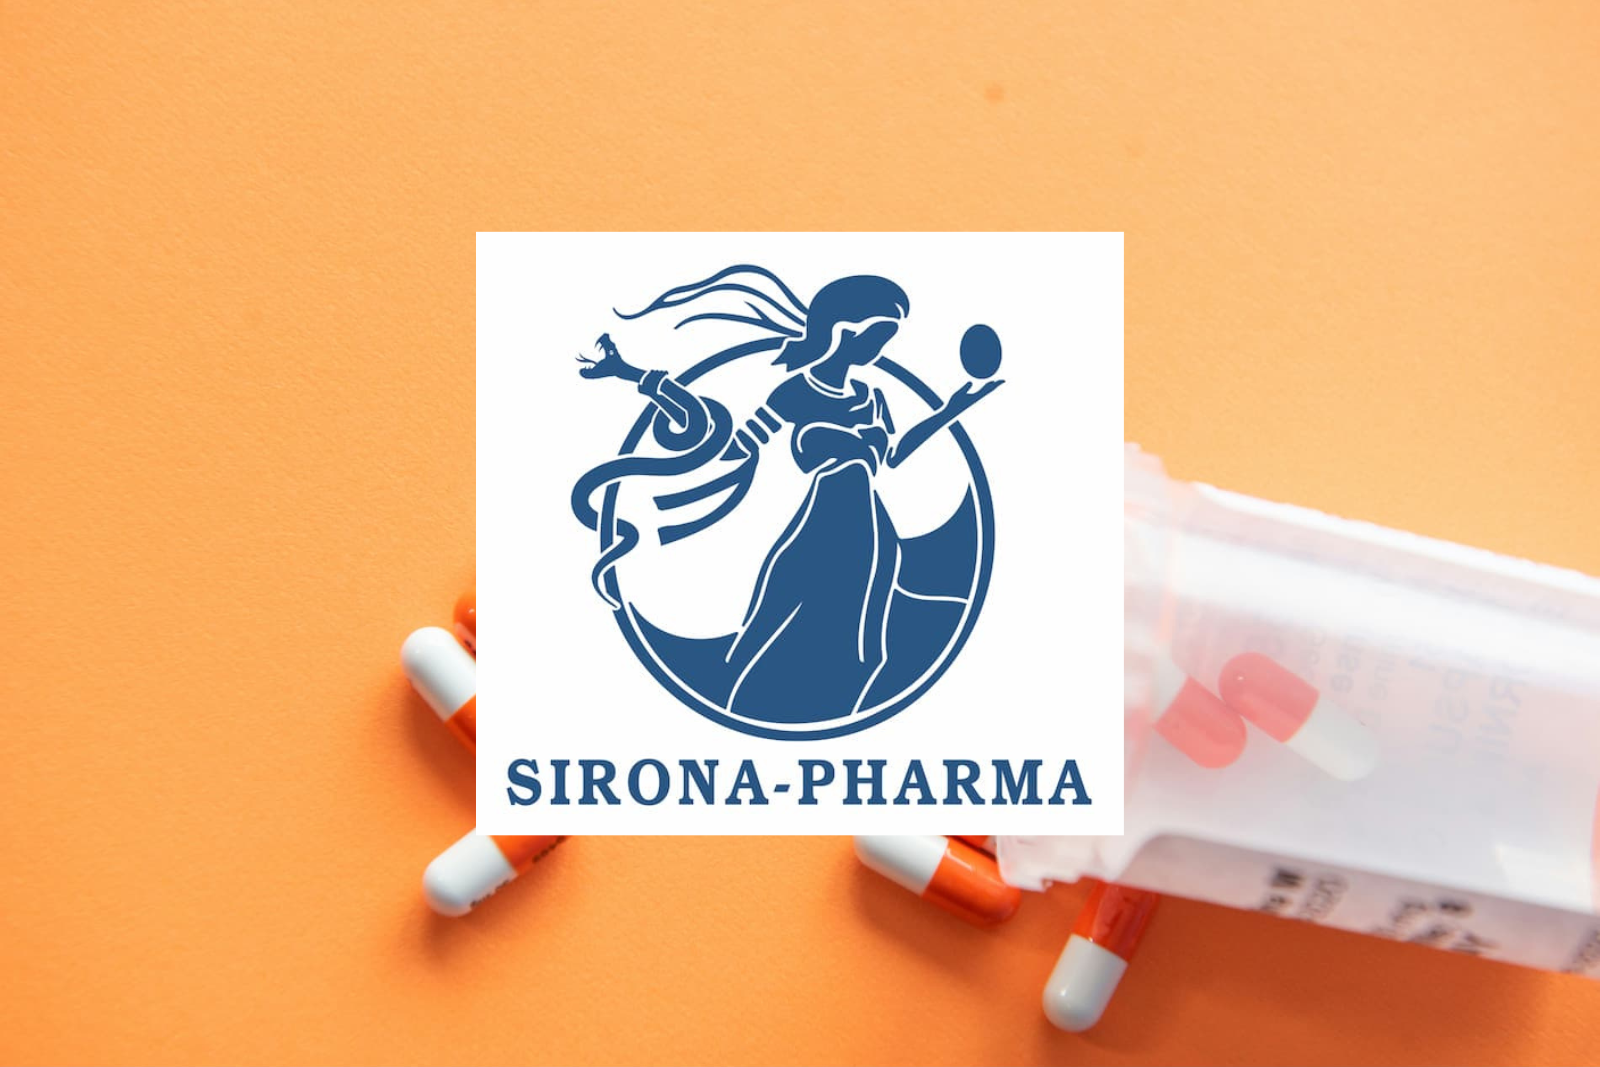 Sirona-Pharma